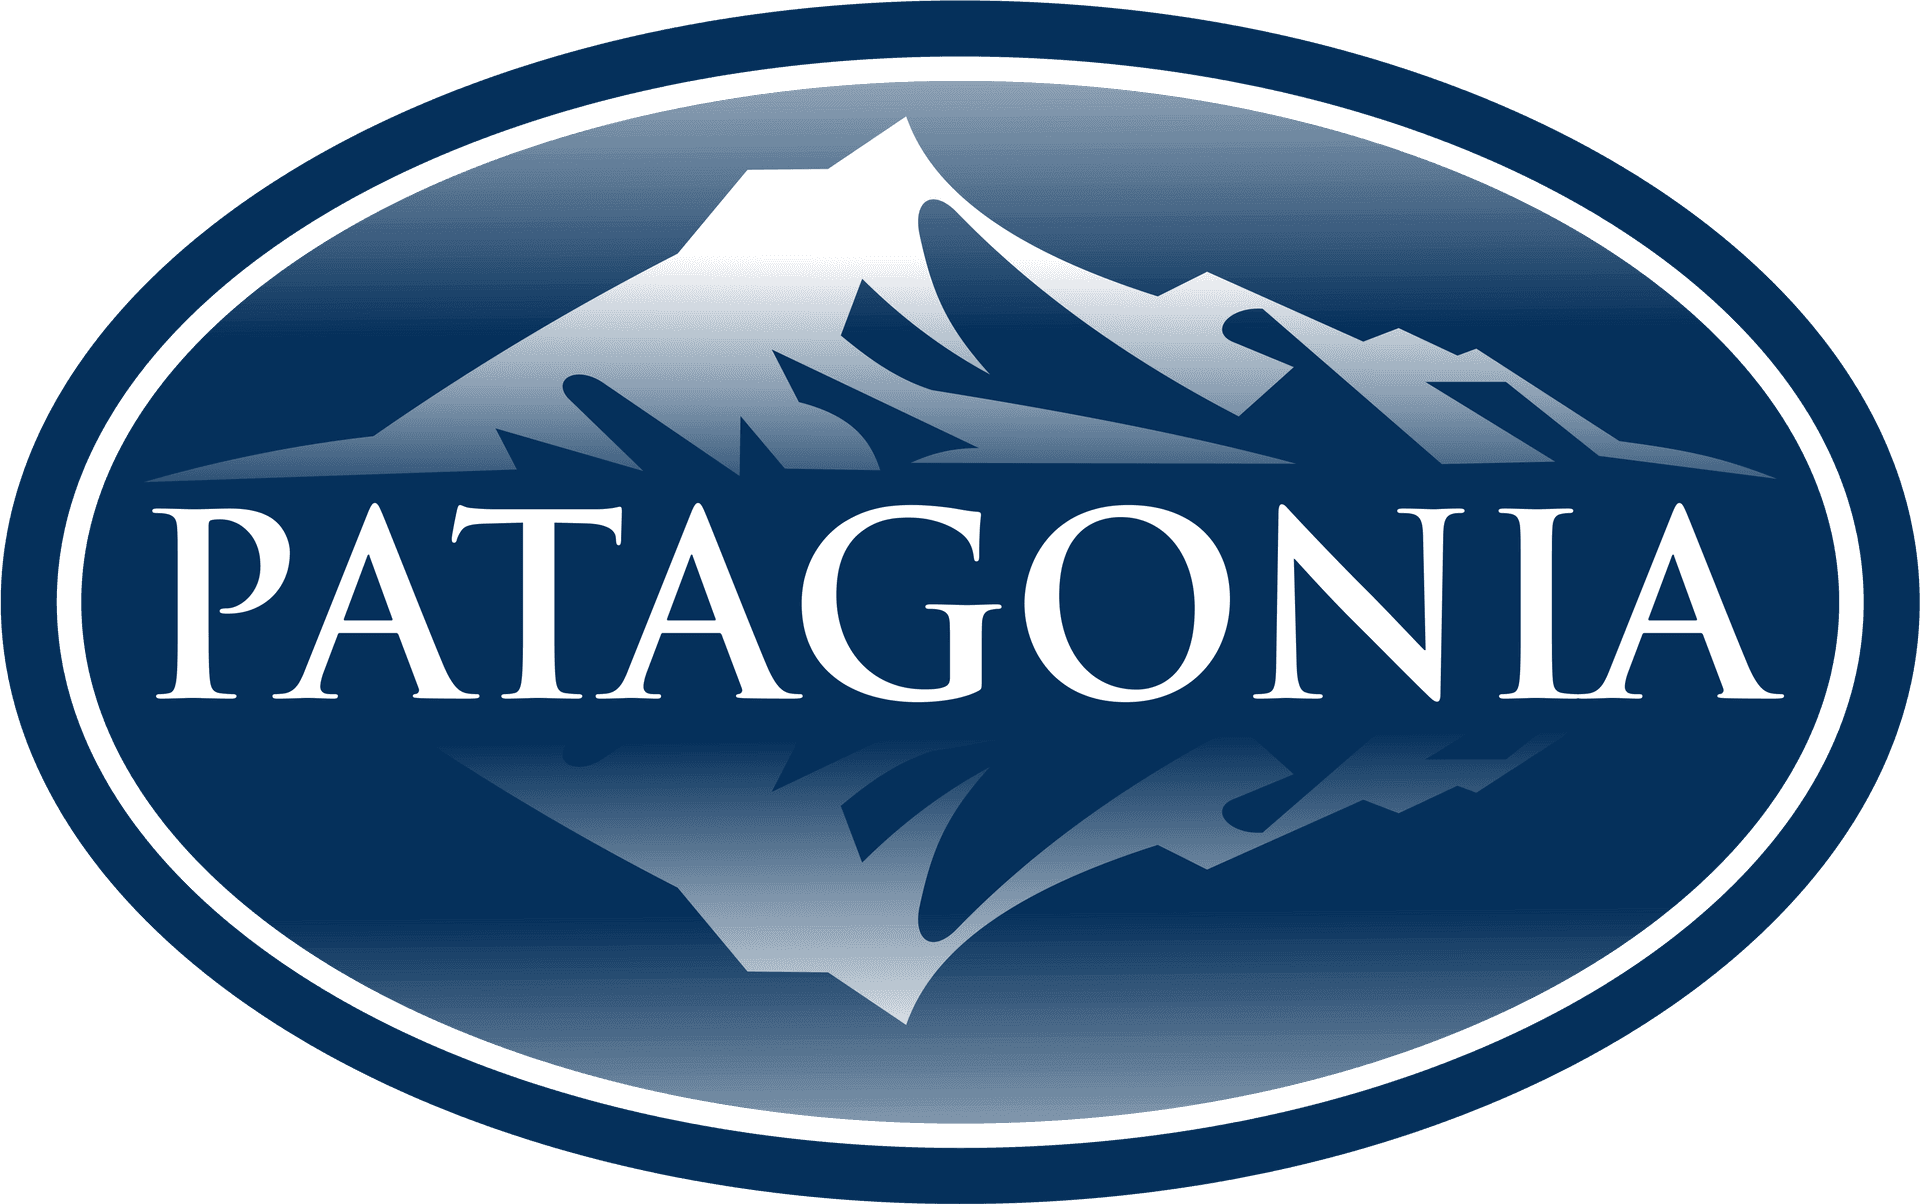 Download Patagonia Logo Design | Wallpapers.com